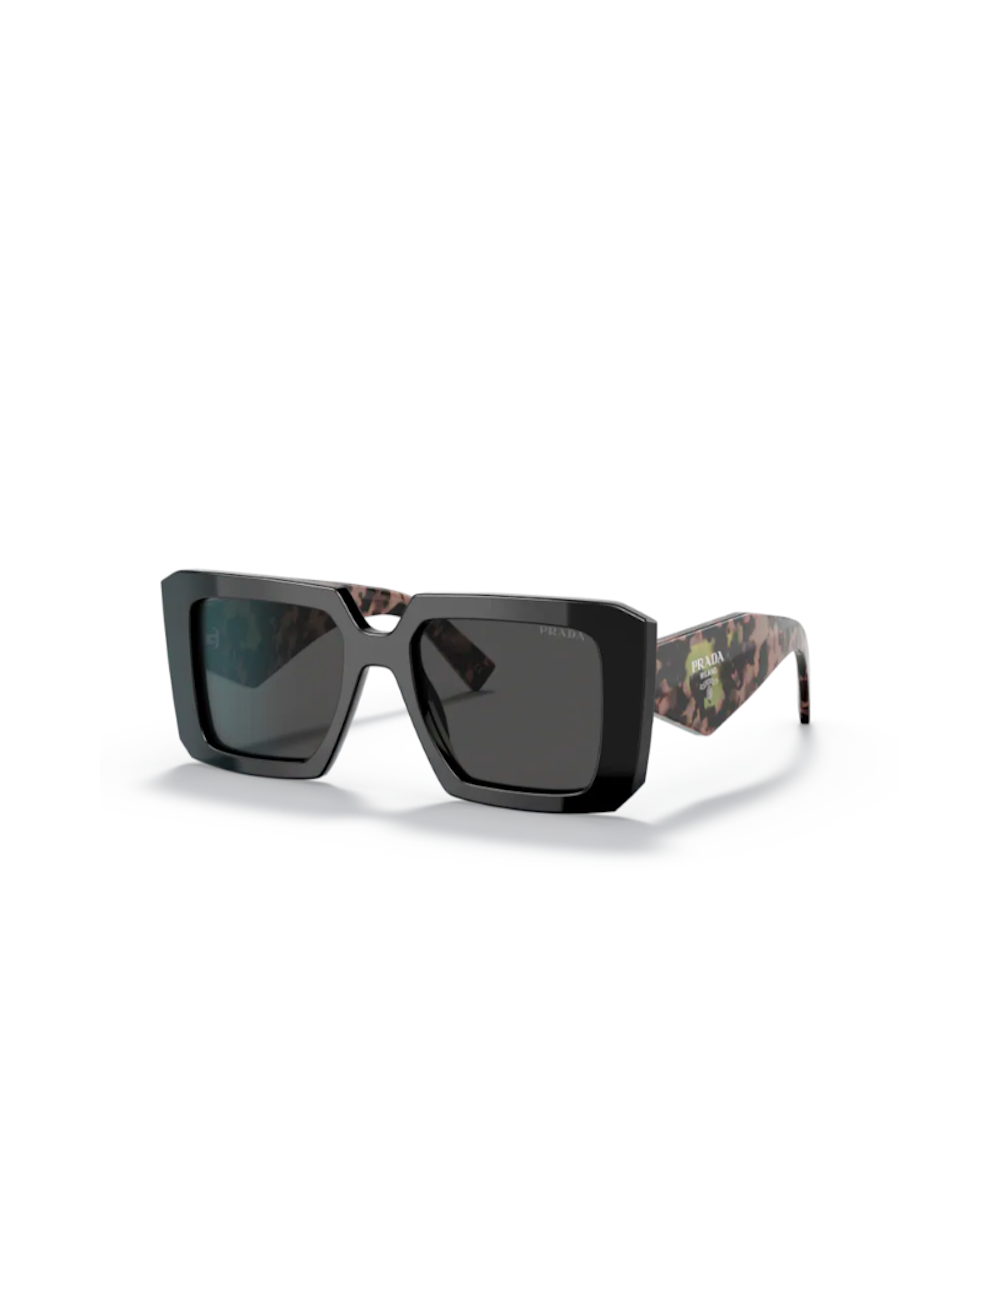 Prada PR 23YS 1AB5S0 sunglasses for women – Ottica Mauro